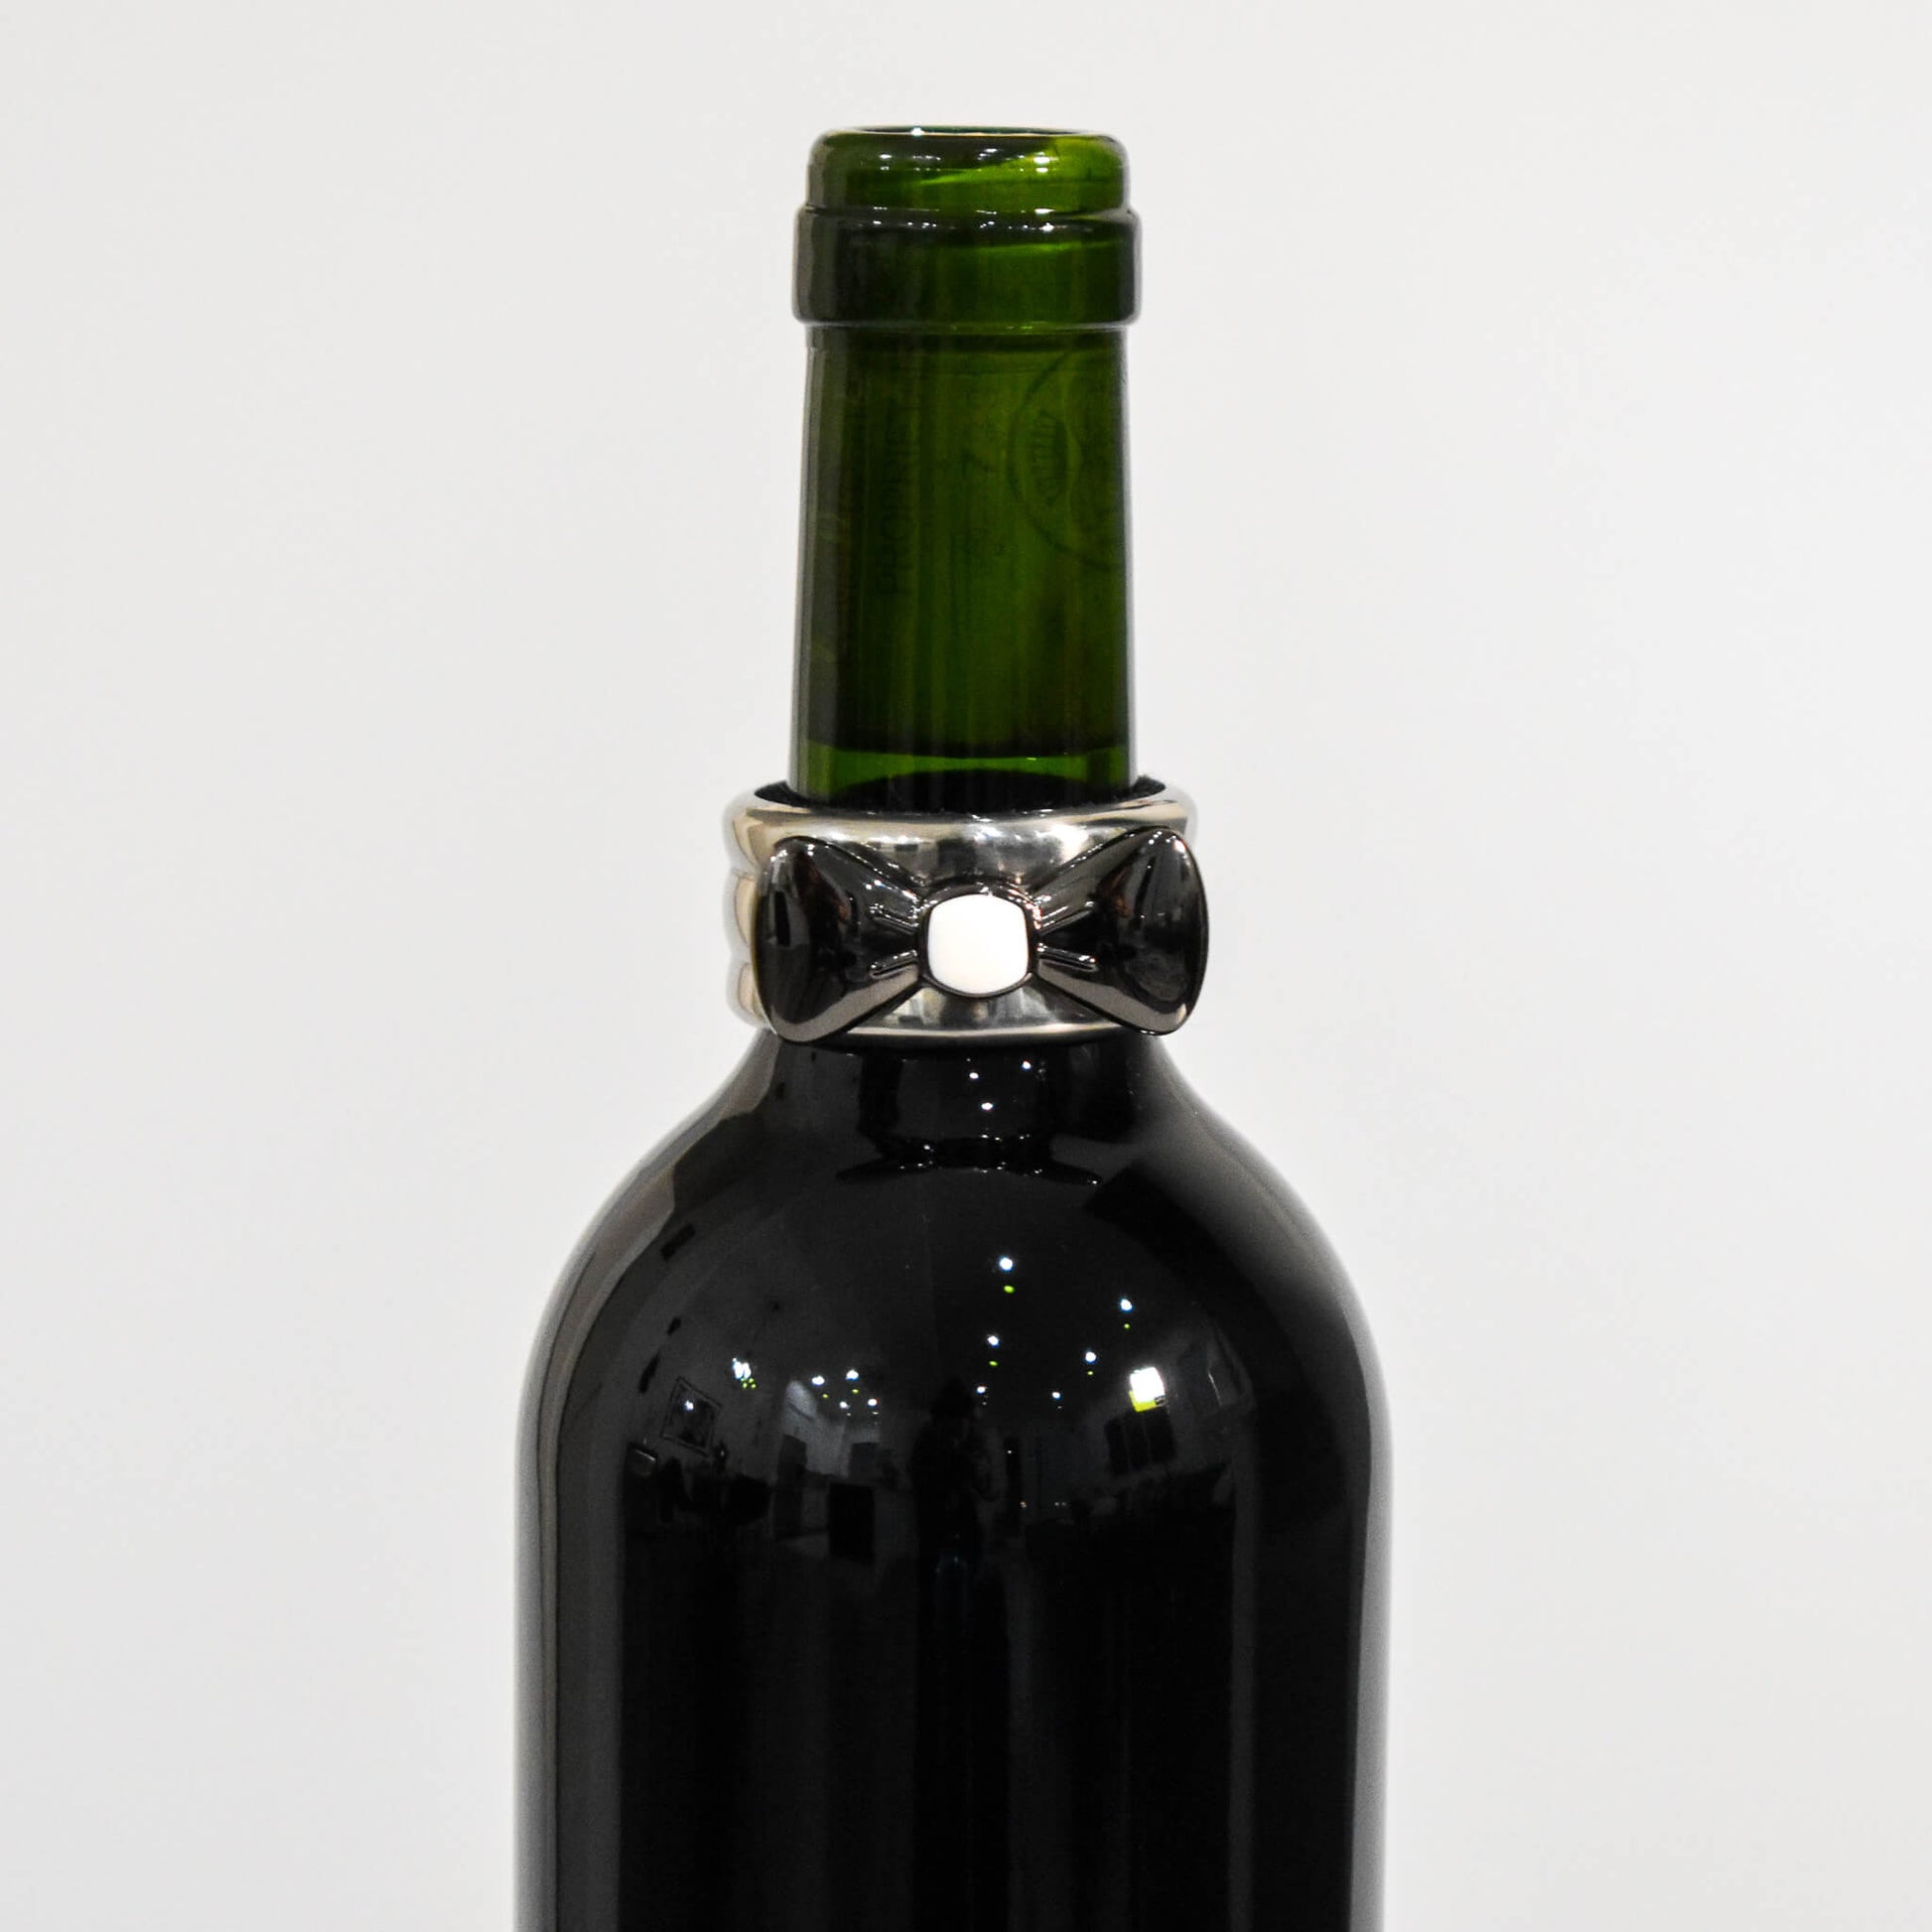 Wine Bottle Drip Ring Collar | Wine Drip Collars | Drips To Sips